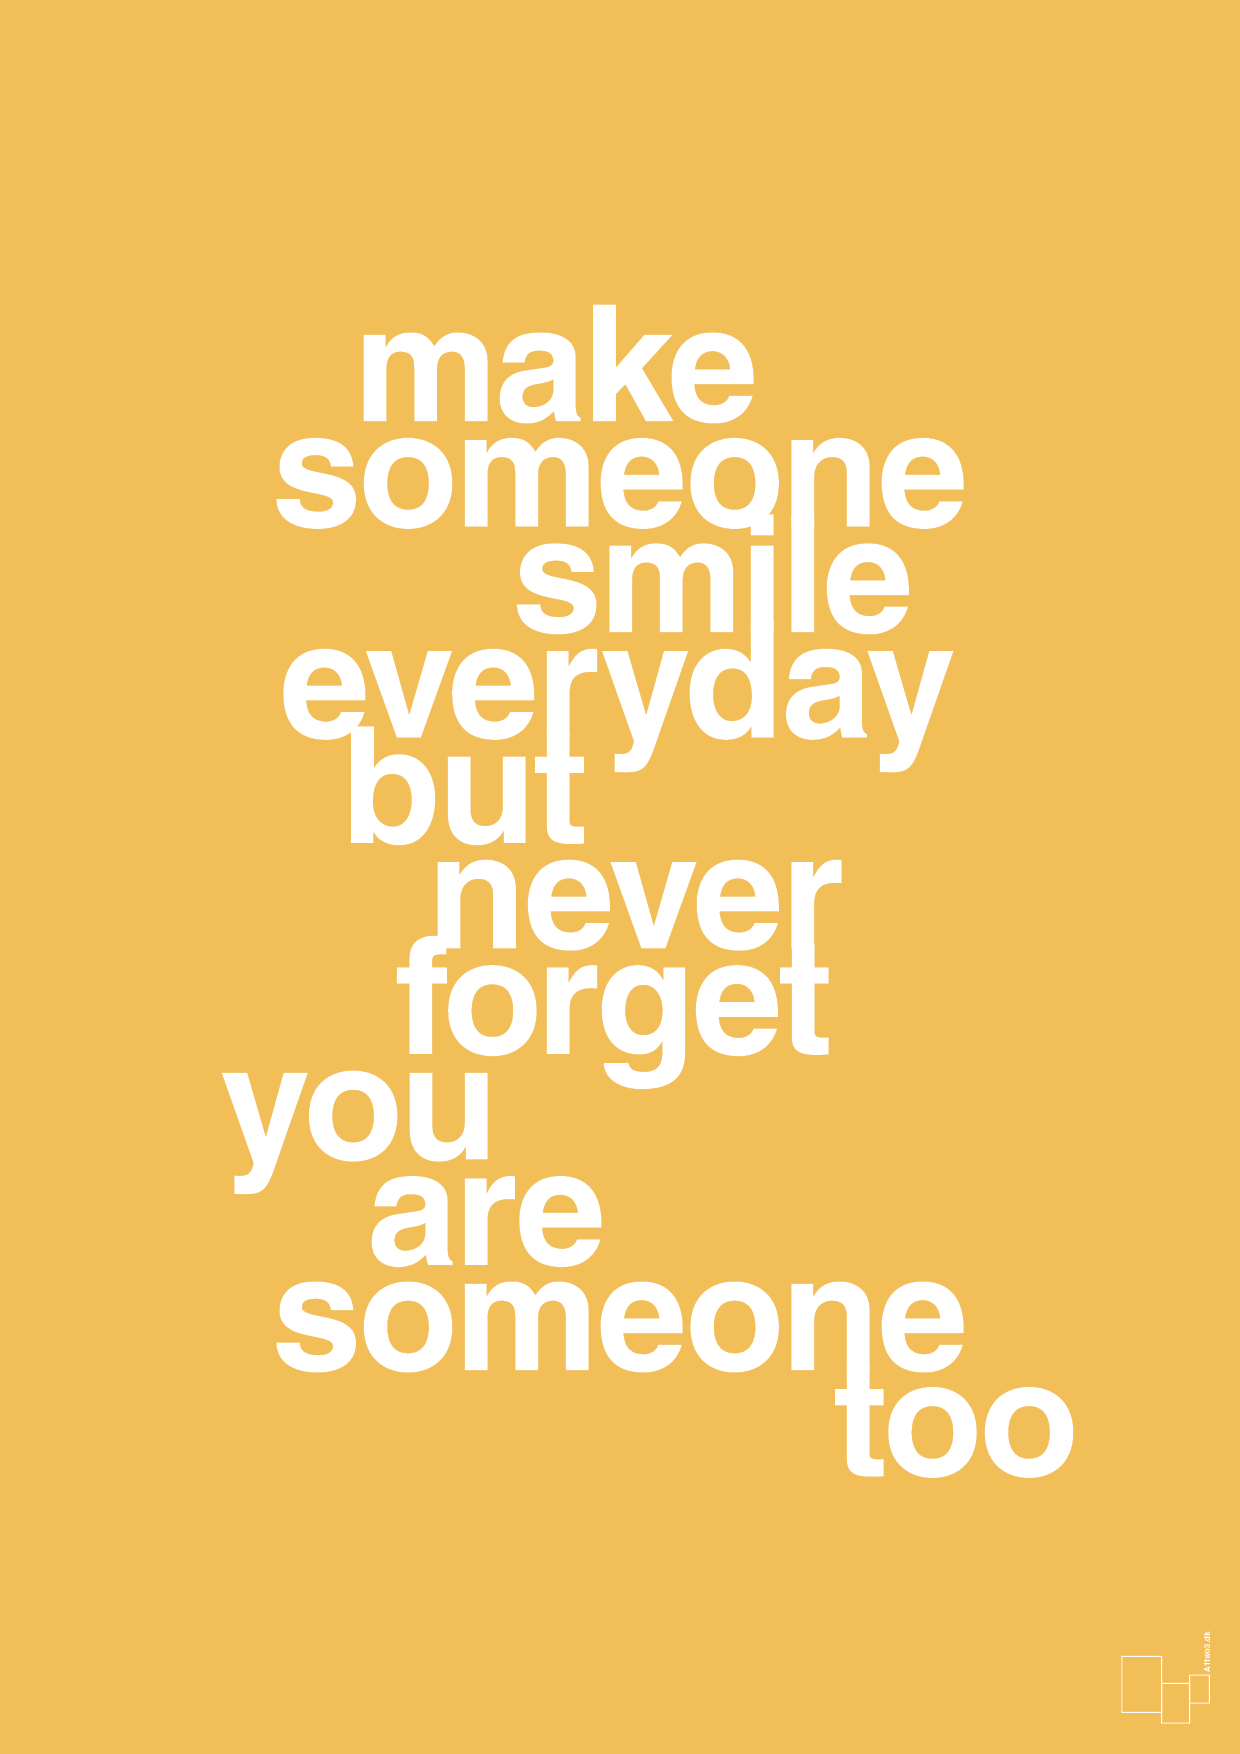 make someone smile everyday - Plakat med Ordsprog i Honeycomb